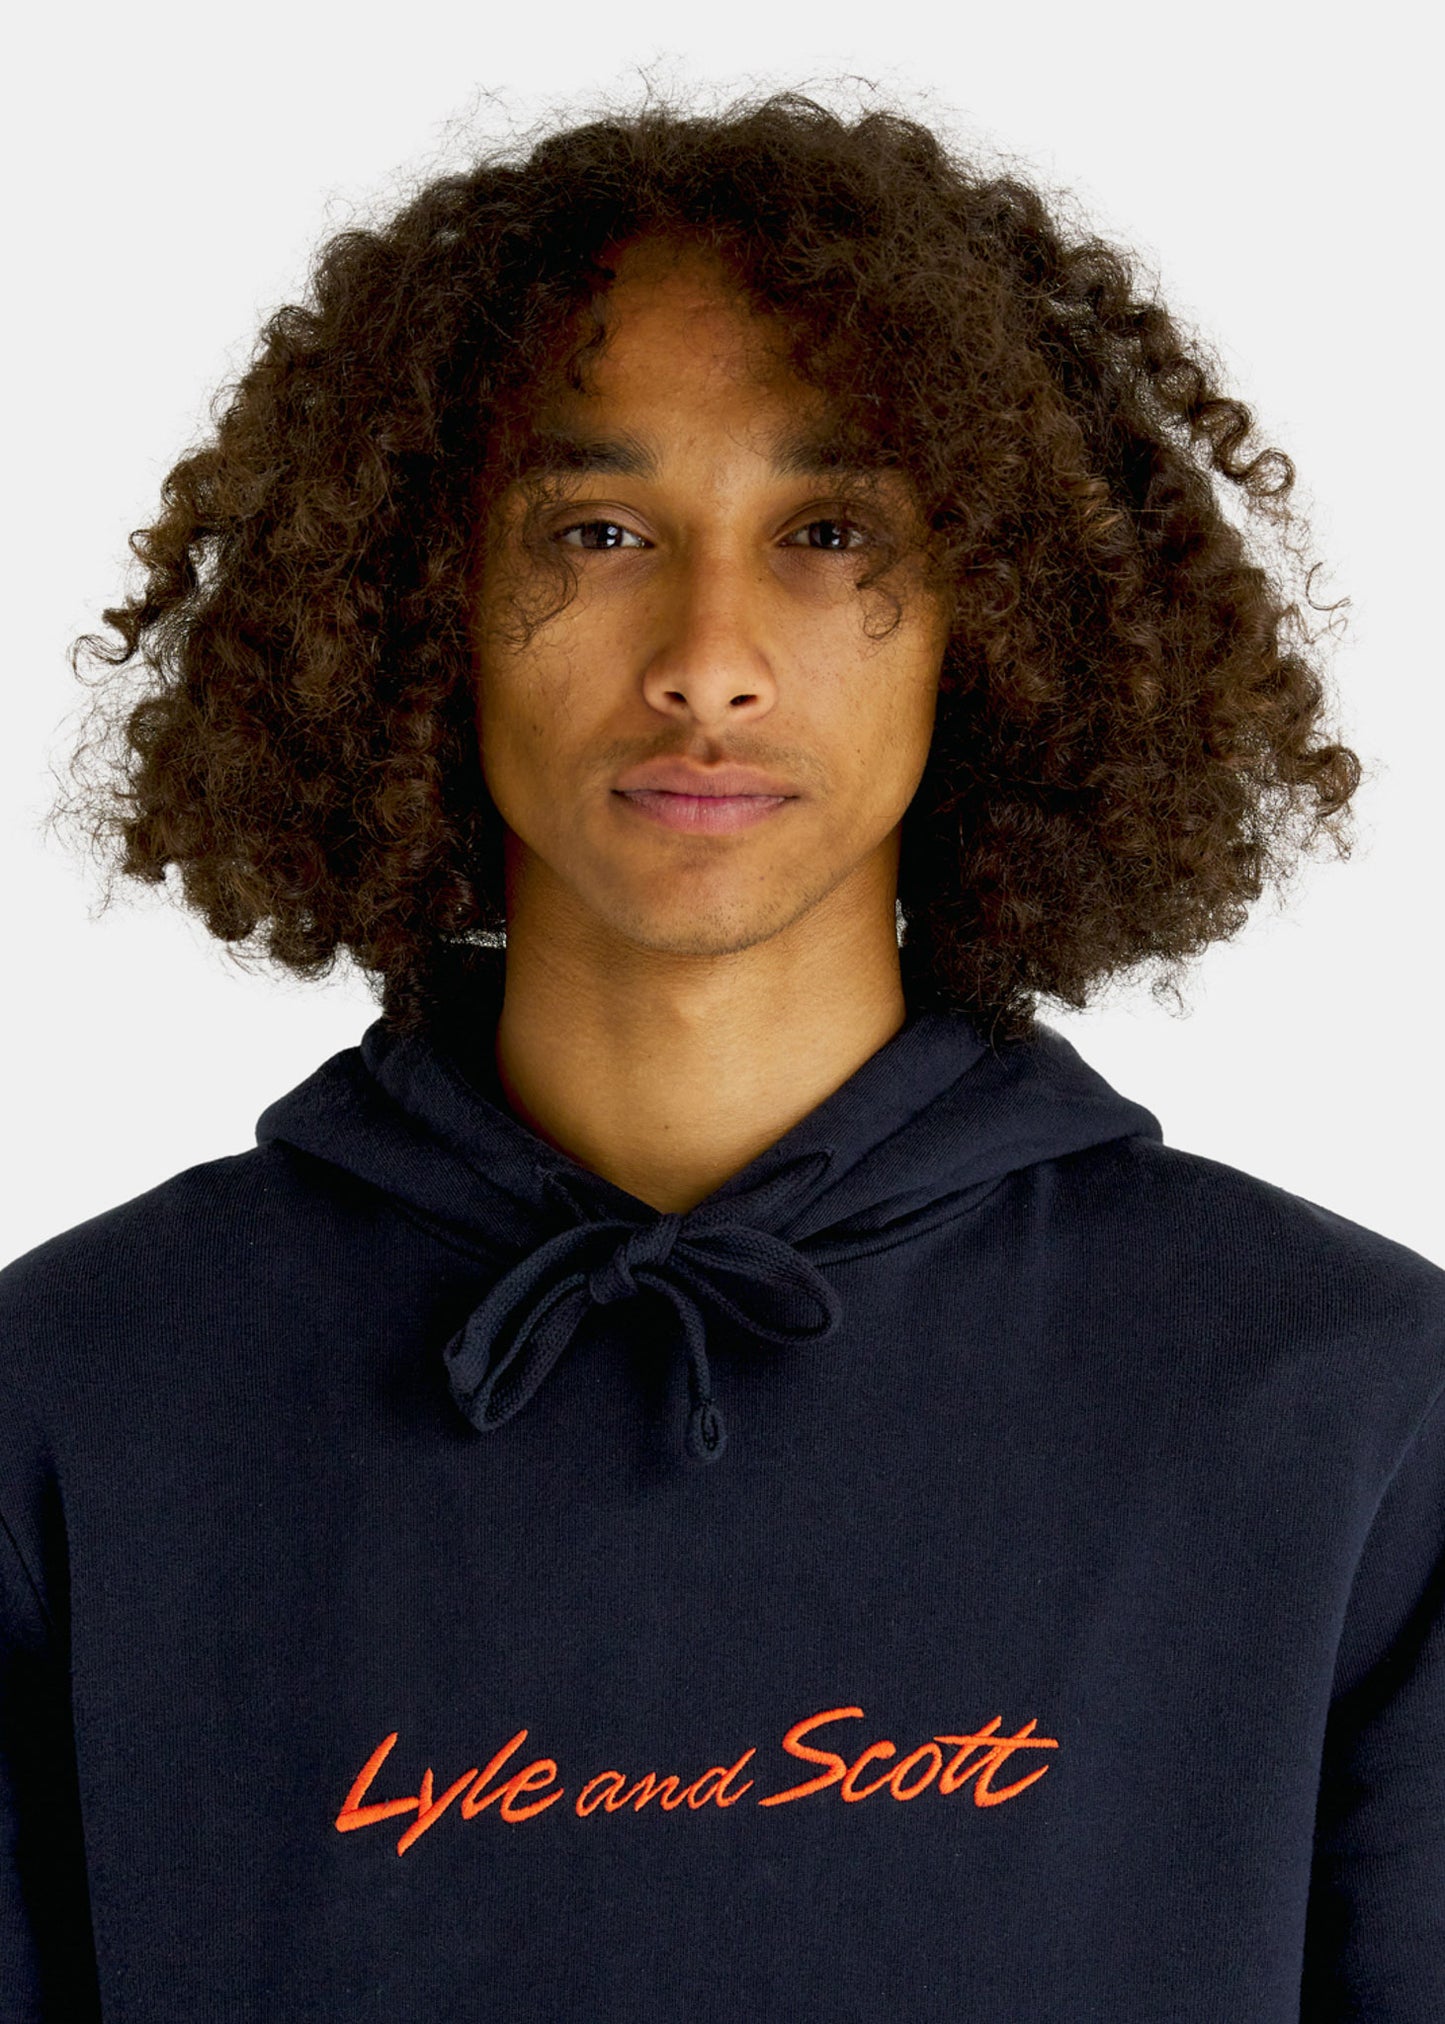 Embroidered logo hoodie - dark navy sorrel orange